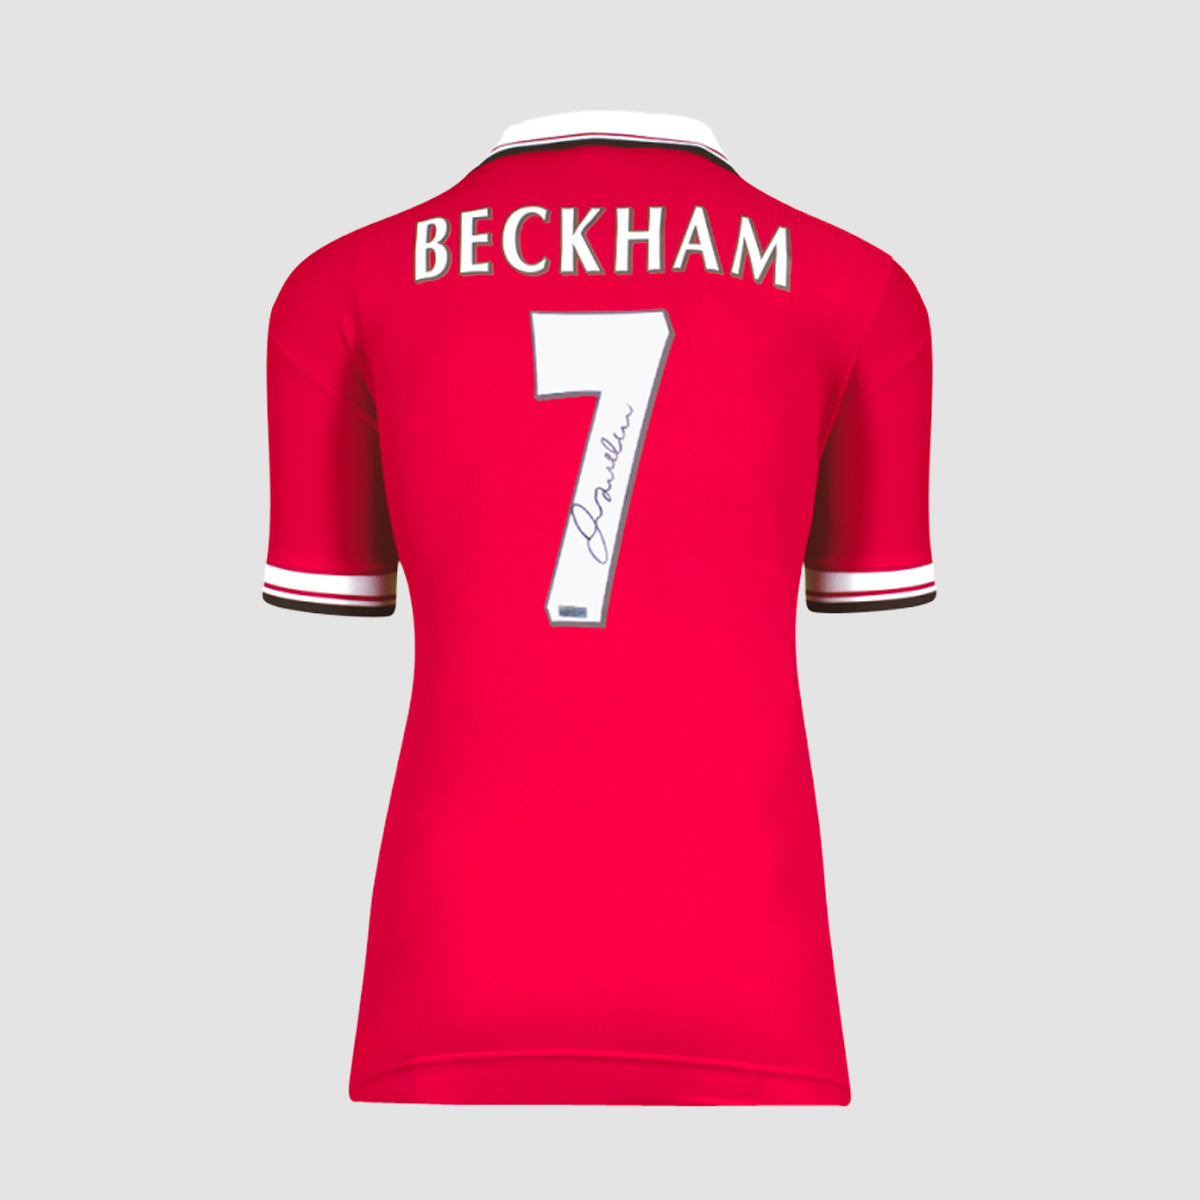 David Beckham Official UEFA Champions League Back Signed Manchester United 1999 Home Shirt